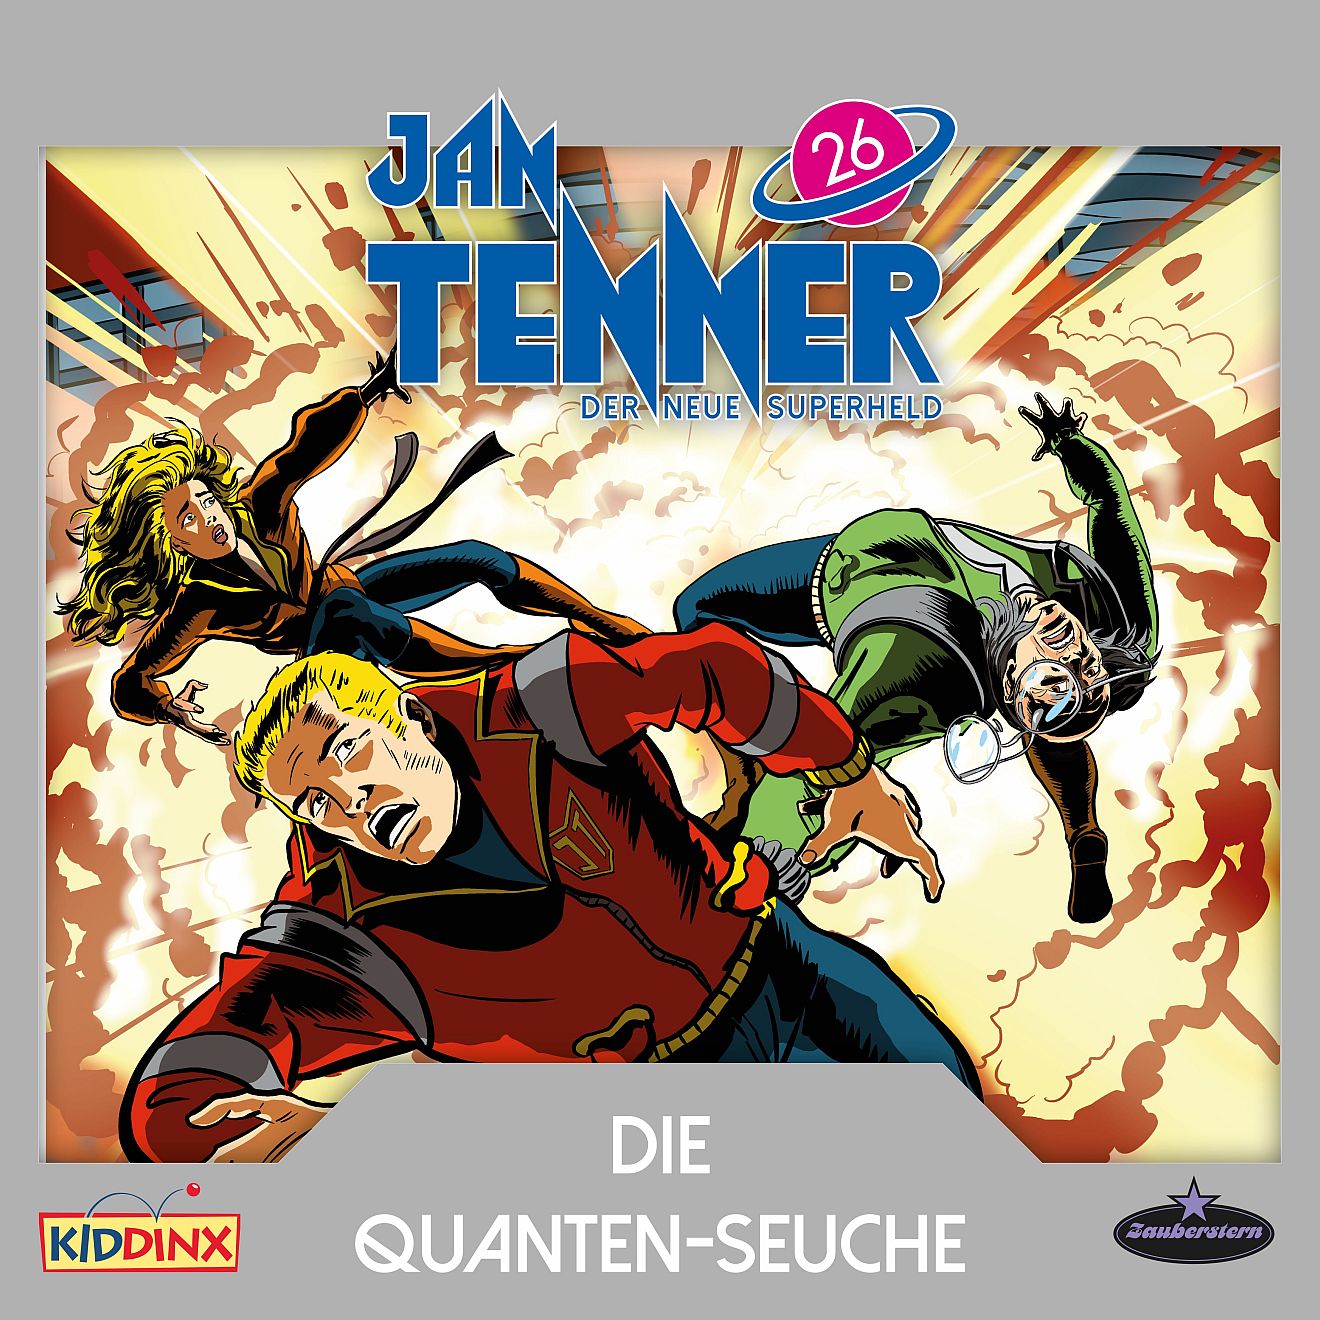 Jan Tenner - Die Quanten-Seuche (26)